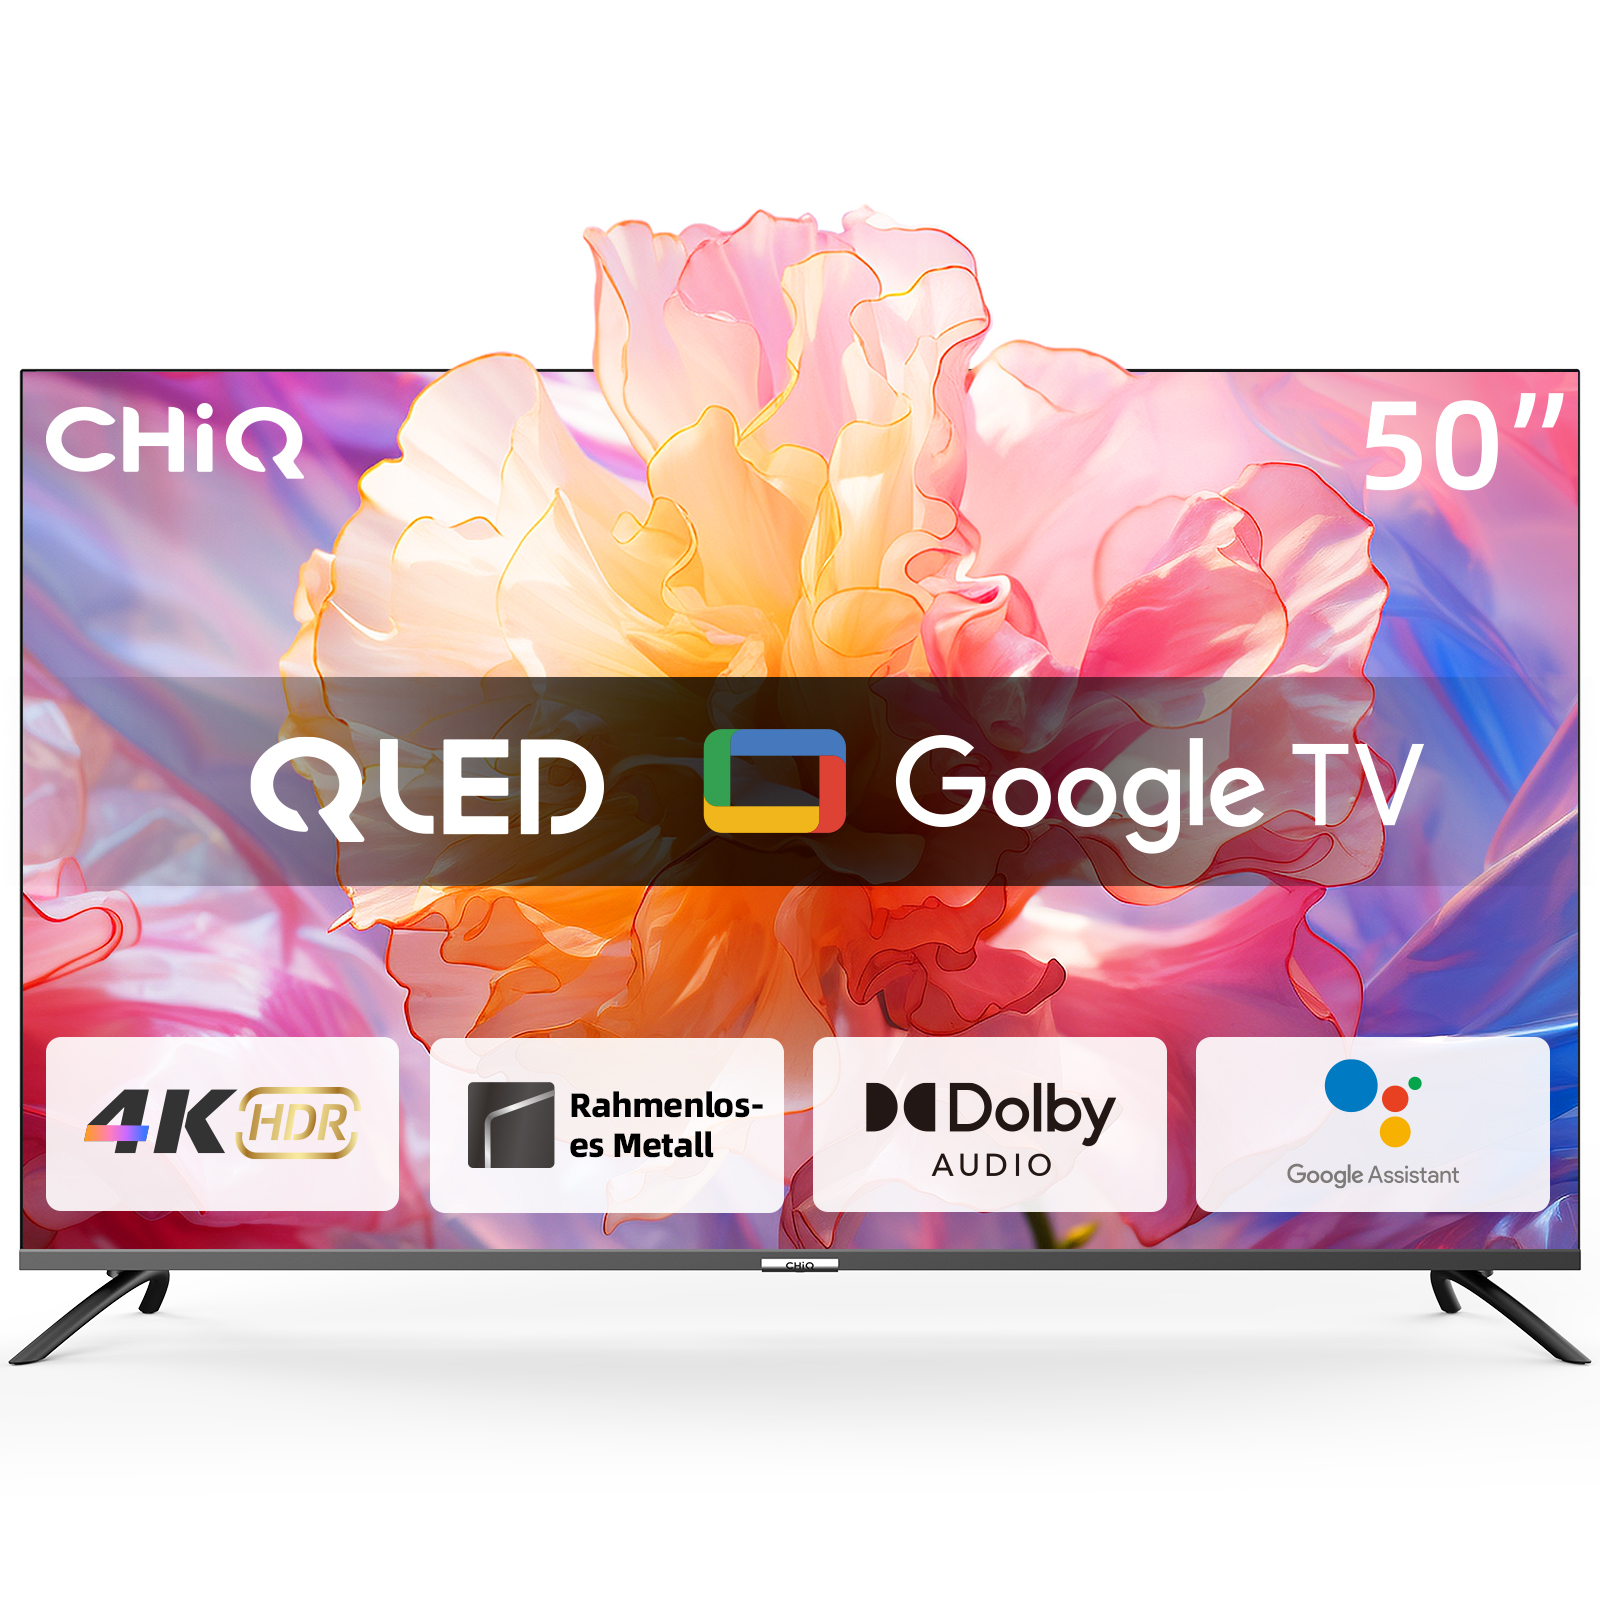 TV) TV (Flat, U50QM8G 127 TV, cm, CHIQ 50 SMART QLED Google / 4K, QLED Zoll